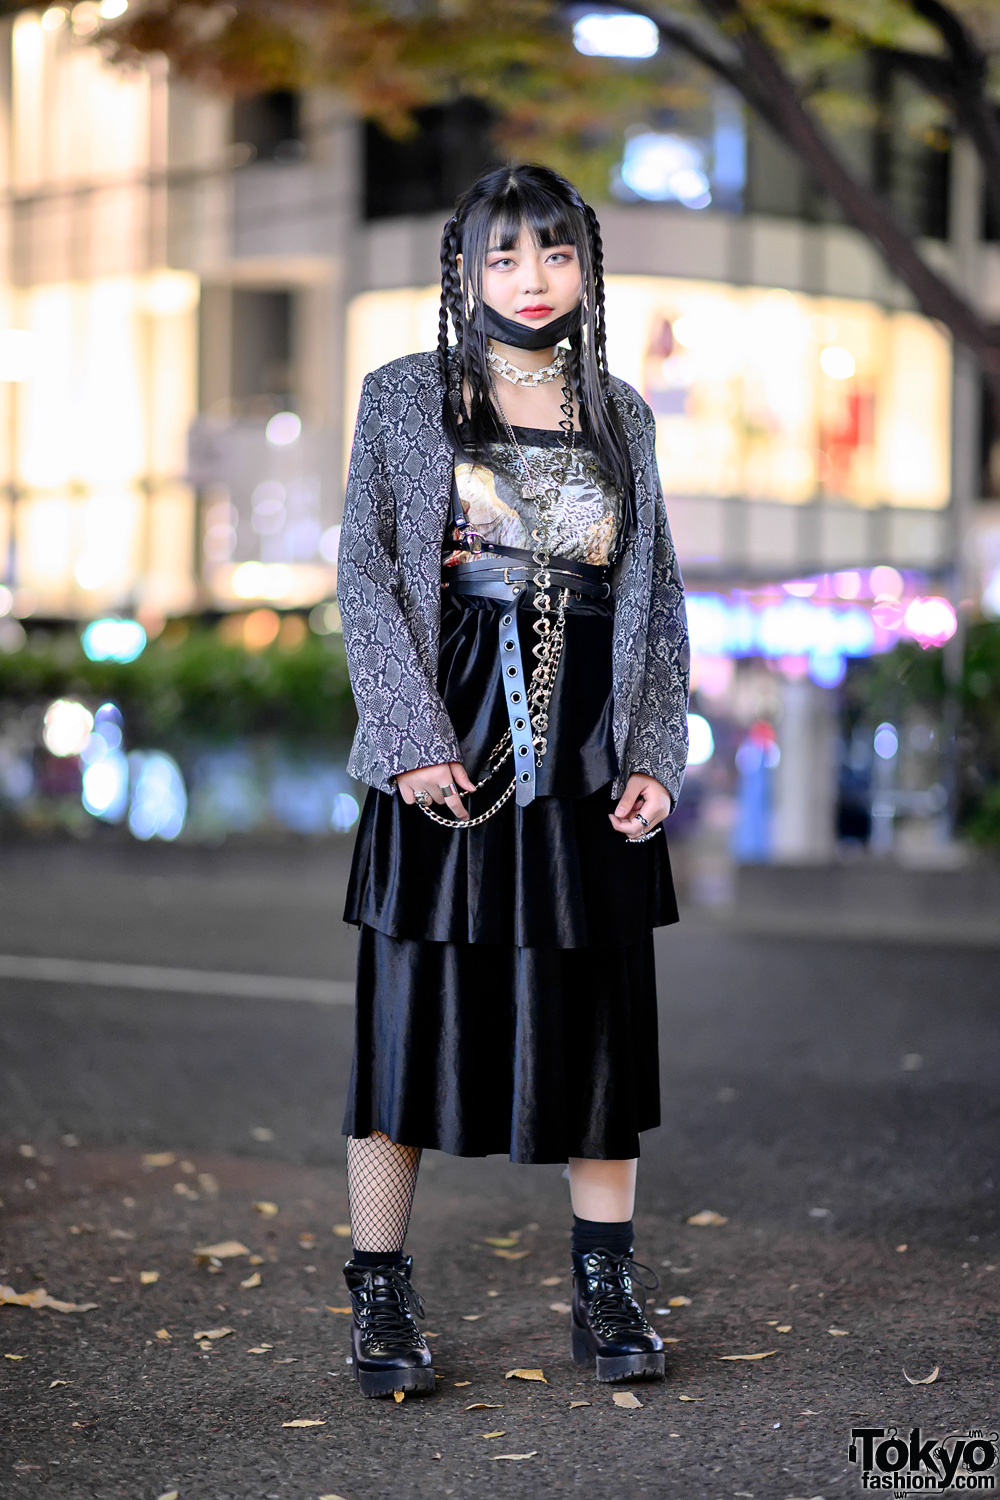 Snakeskin Print Jacket, Face Mask, Leather Harness Belt, Platform Boots & Silver Rings in Harajuku